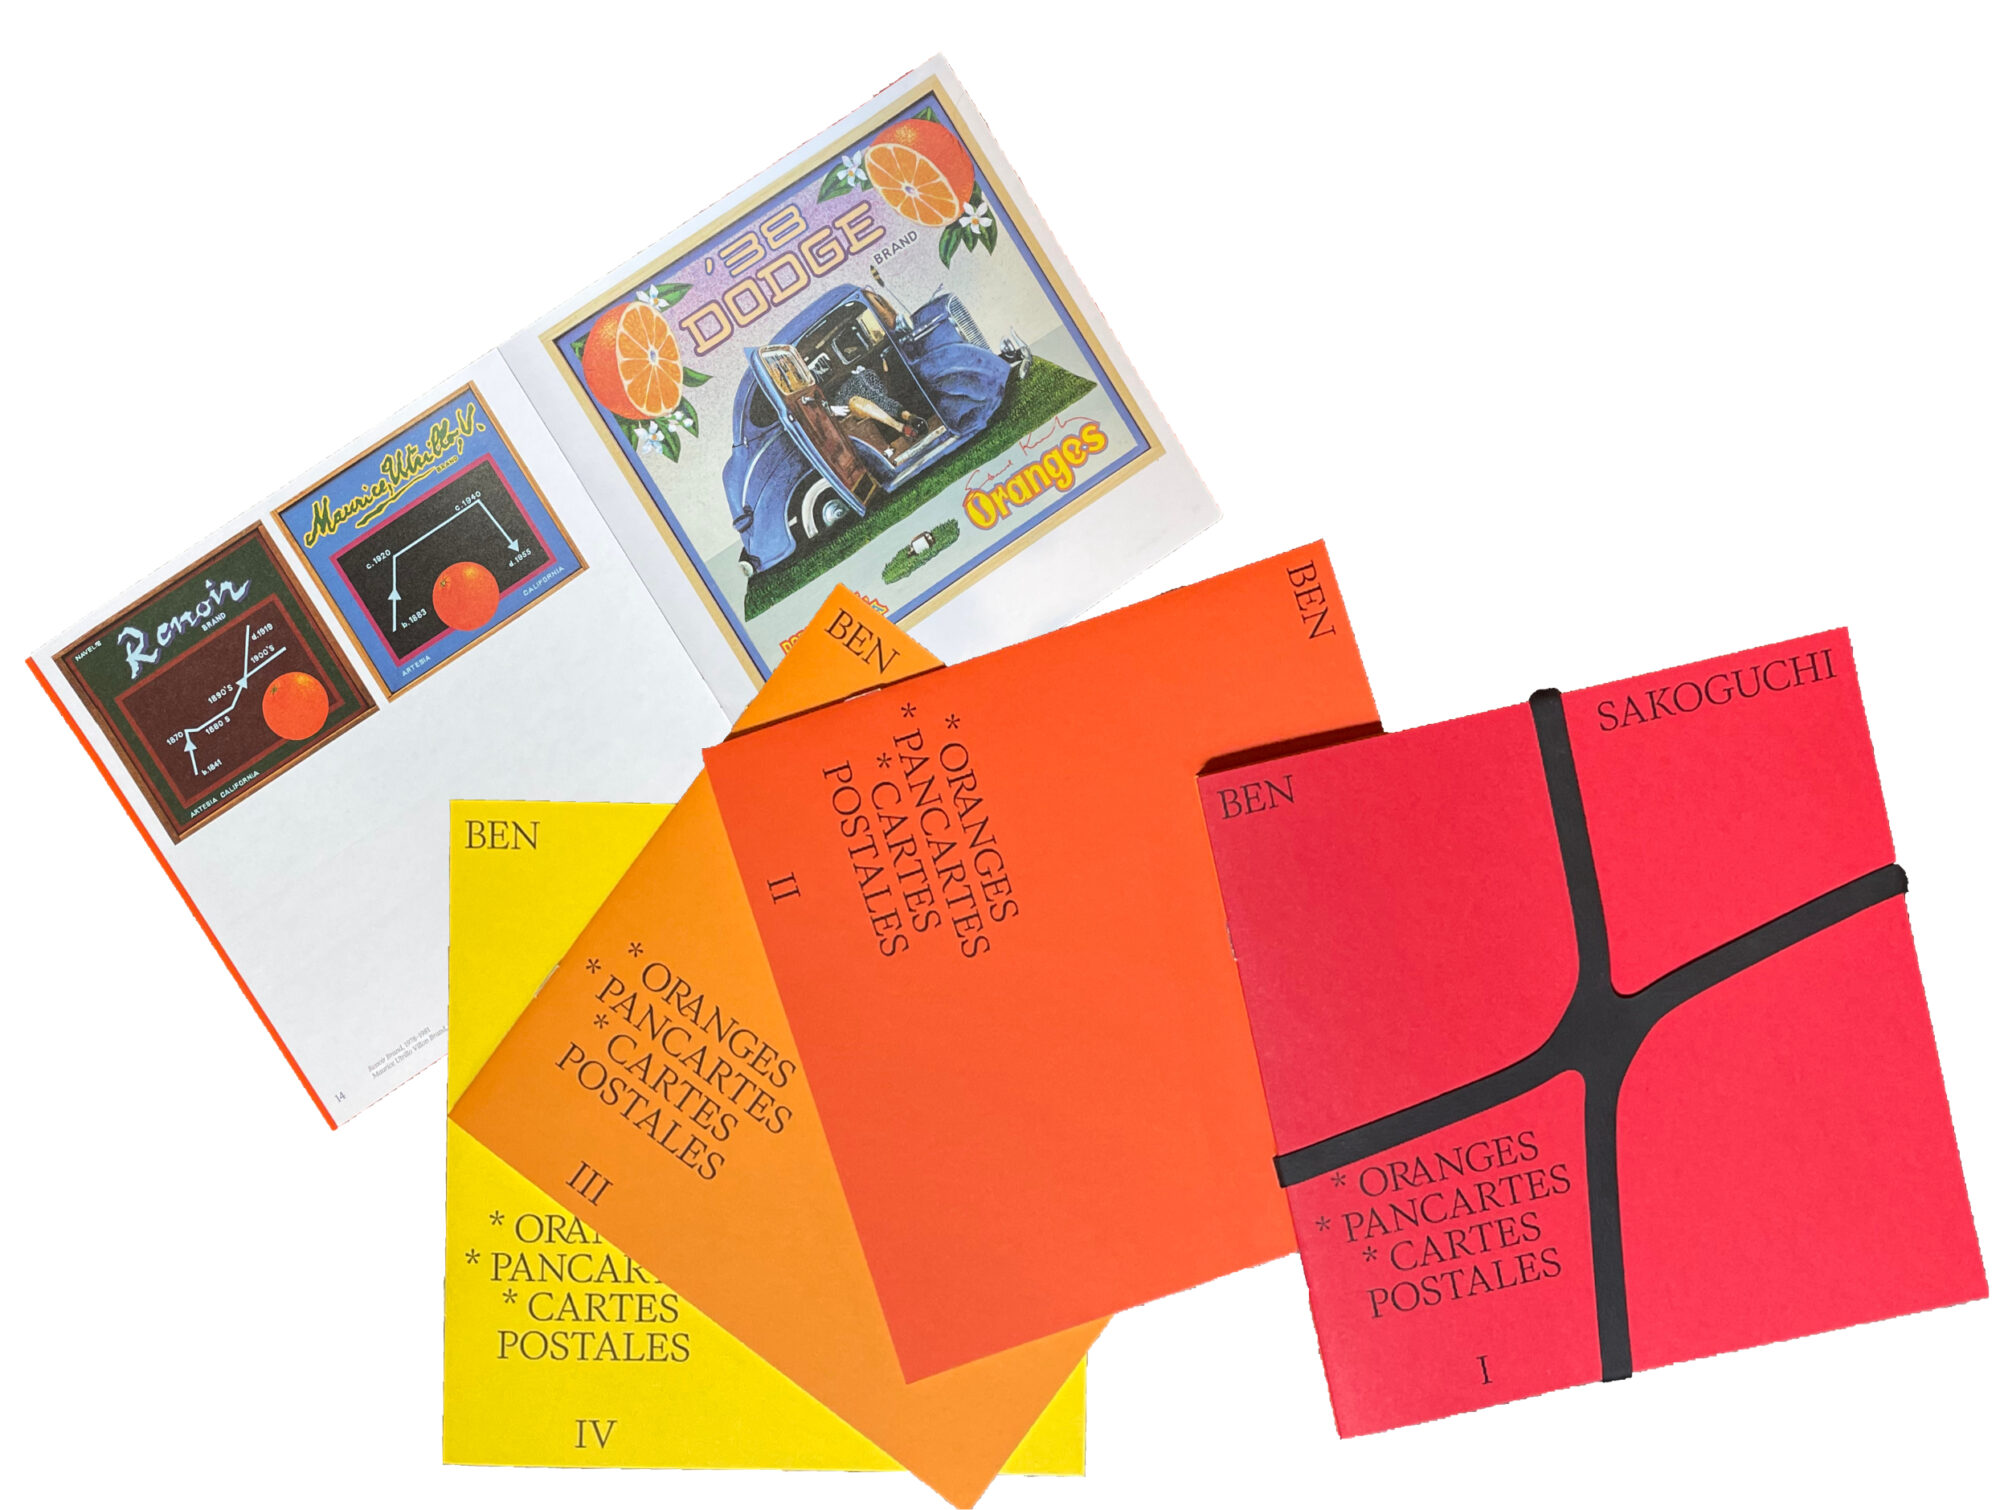 oranges • pancartes • cartes postales - Galerie Georges-Philippe & Nathalie Vallois